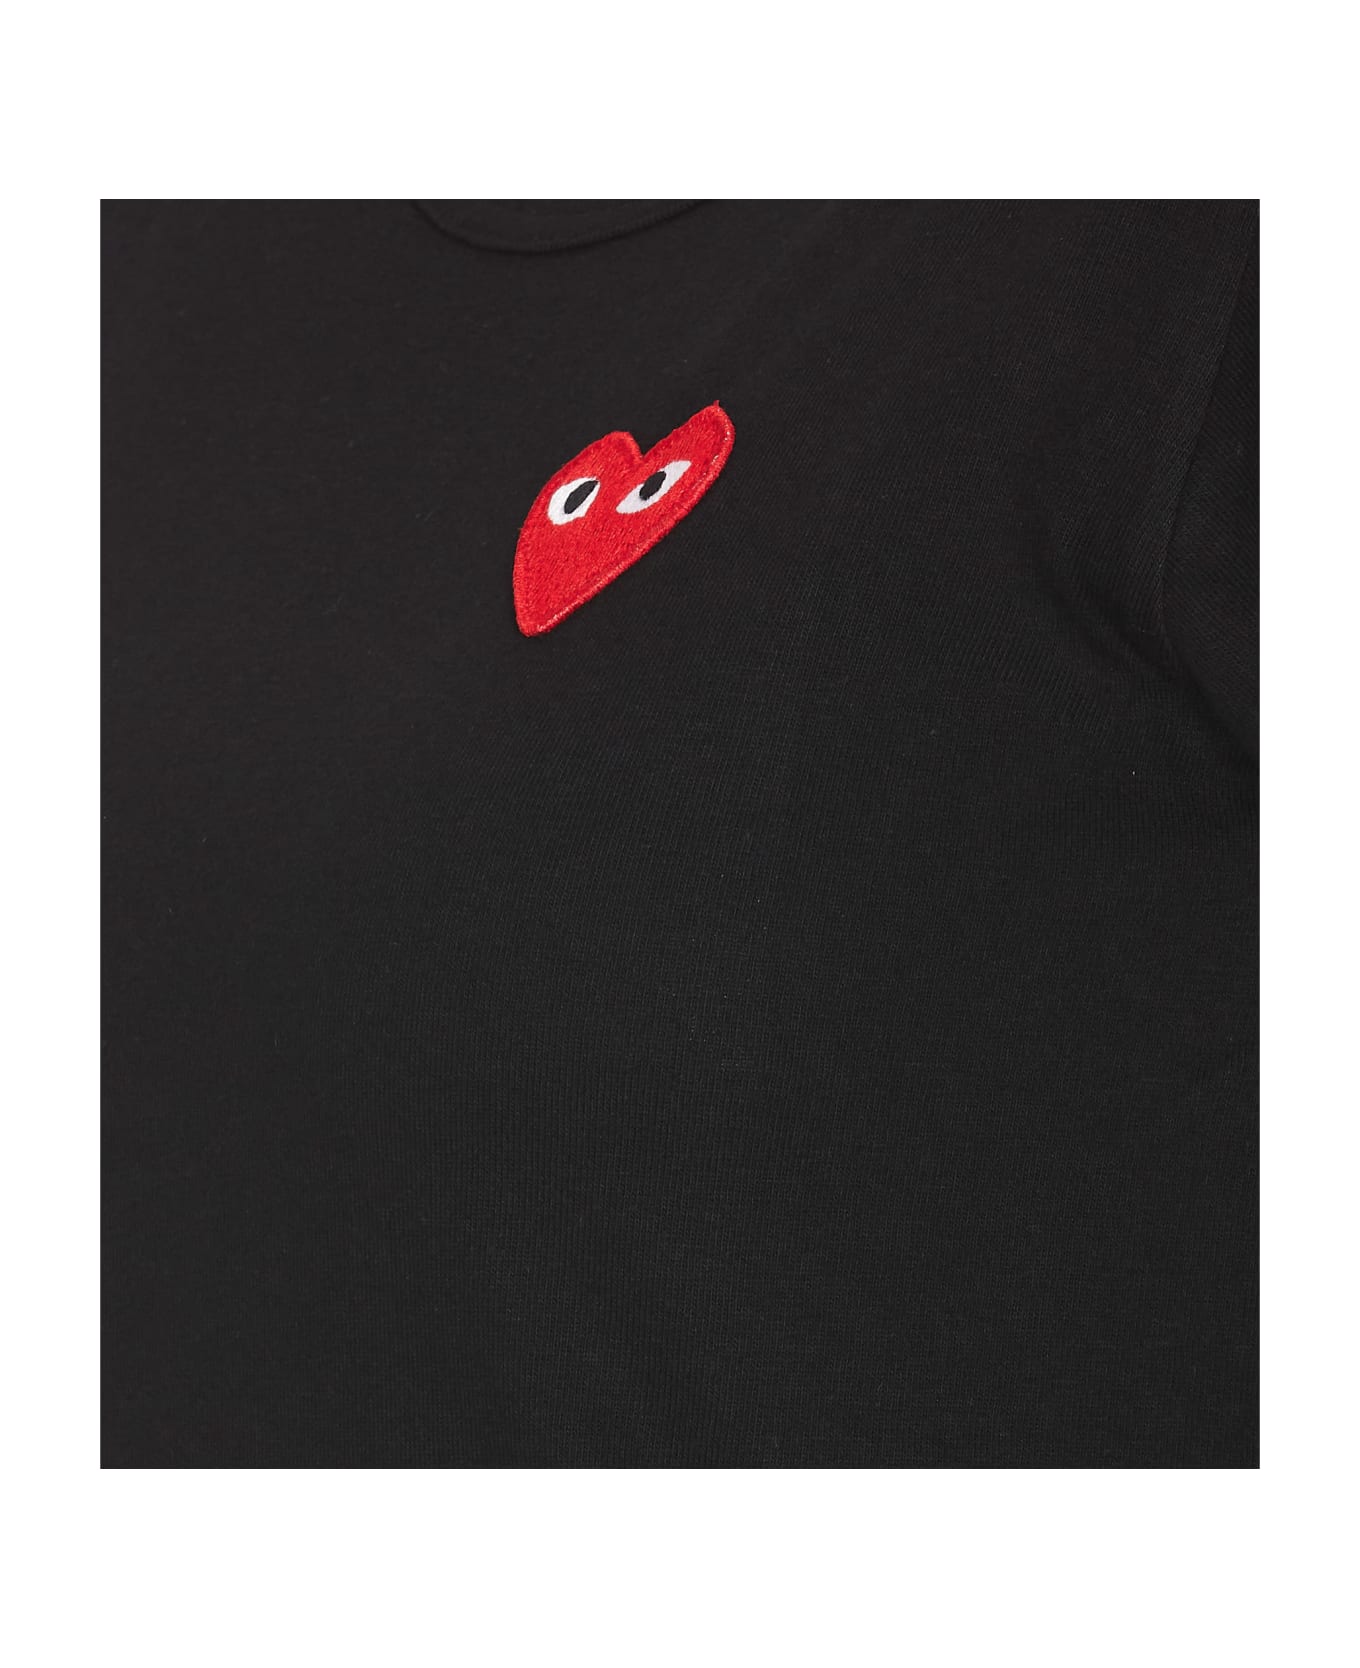 Comme des Garçons Heart Logo T-shirt - Black Tシャツ